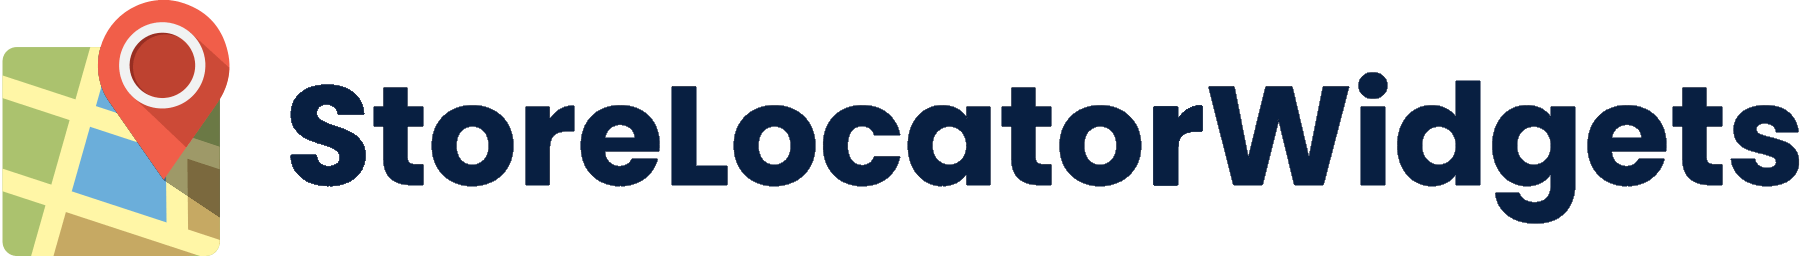 StoreLocatorWidgets: Store Locator Software for Websites